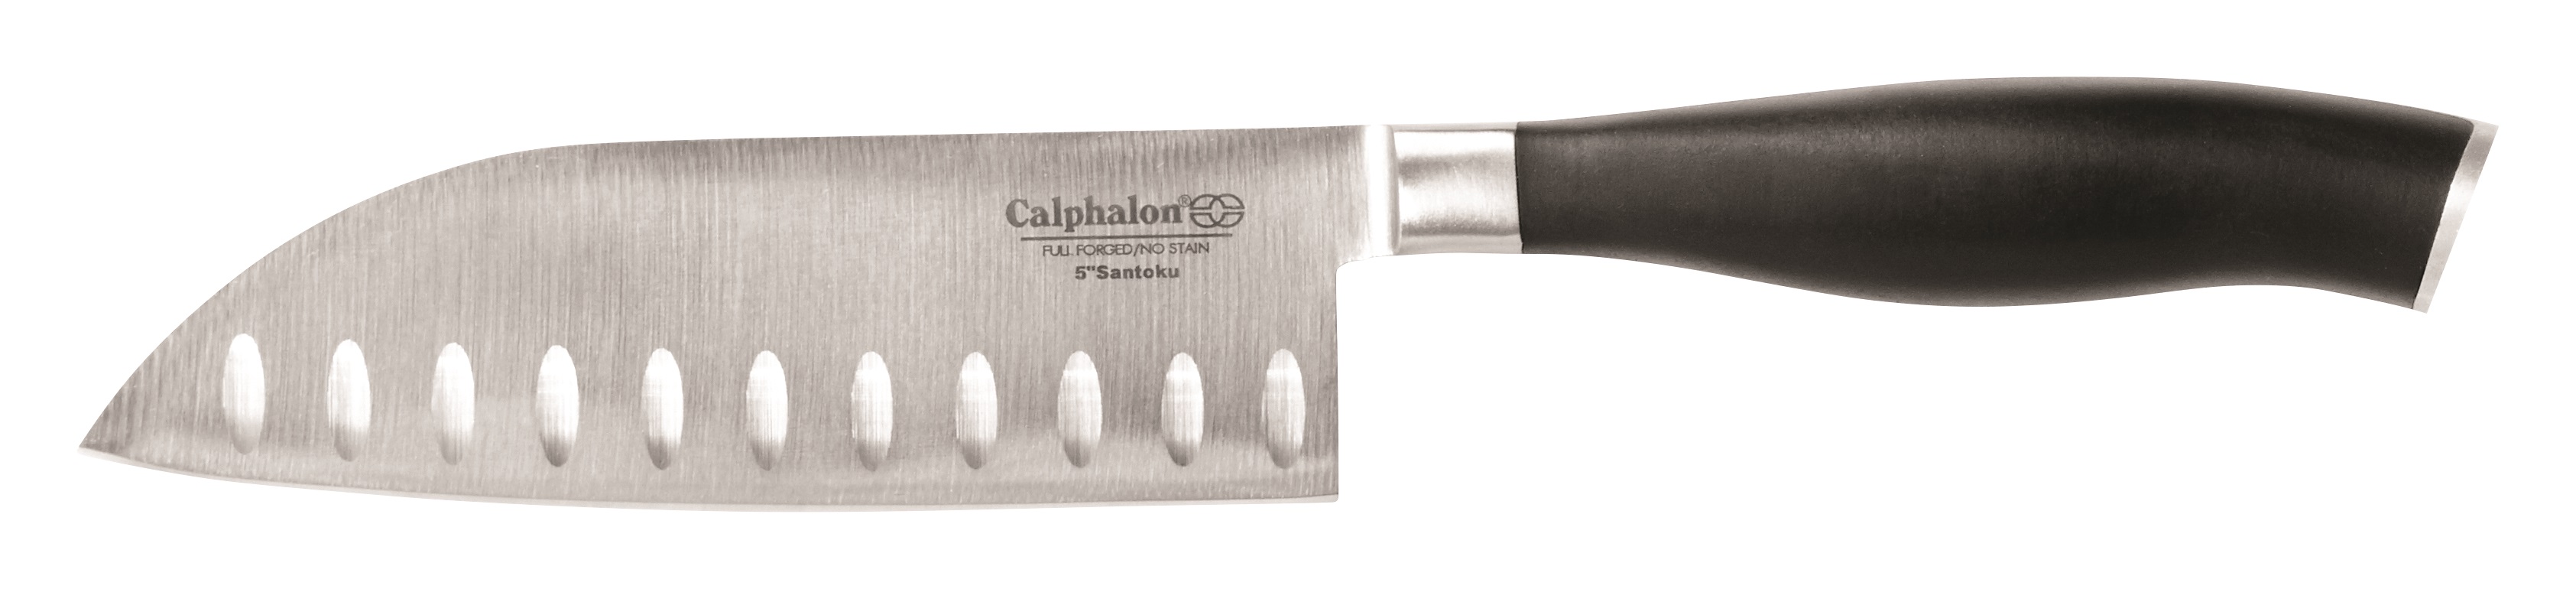 Calphalon Knives — a Cautionary Tale